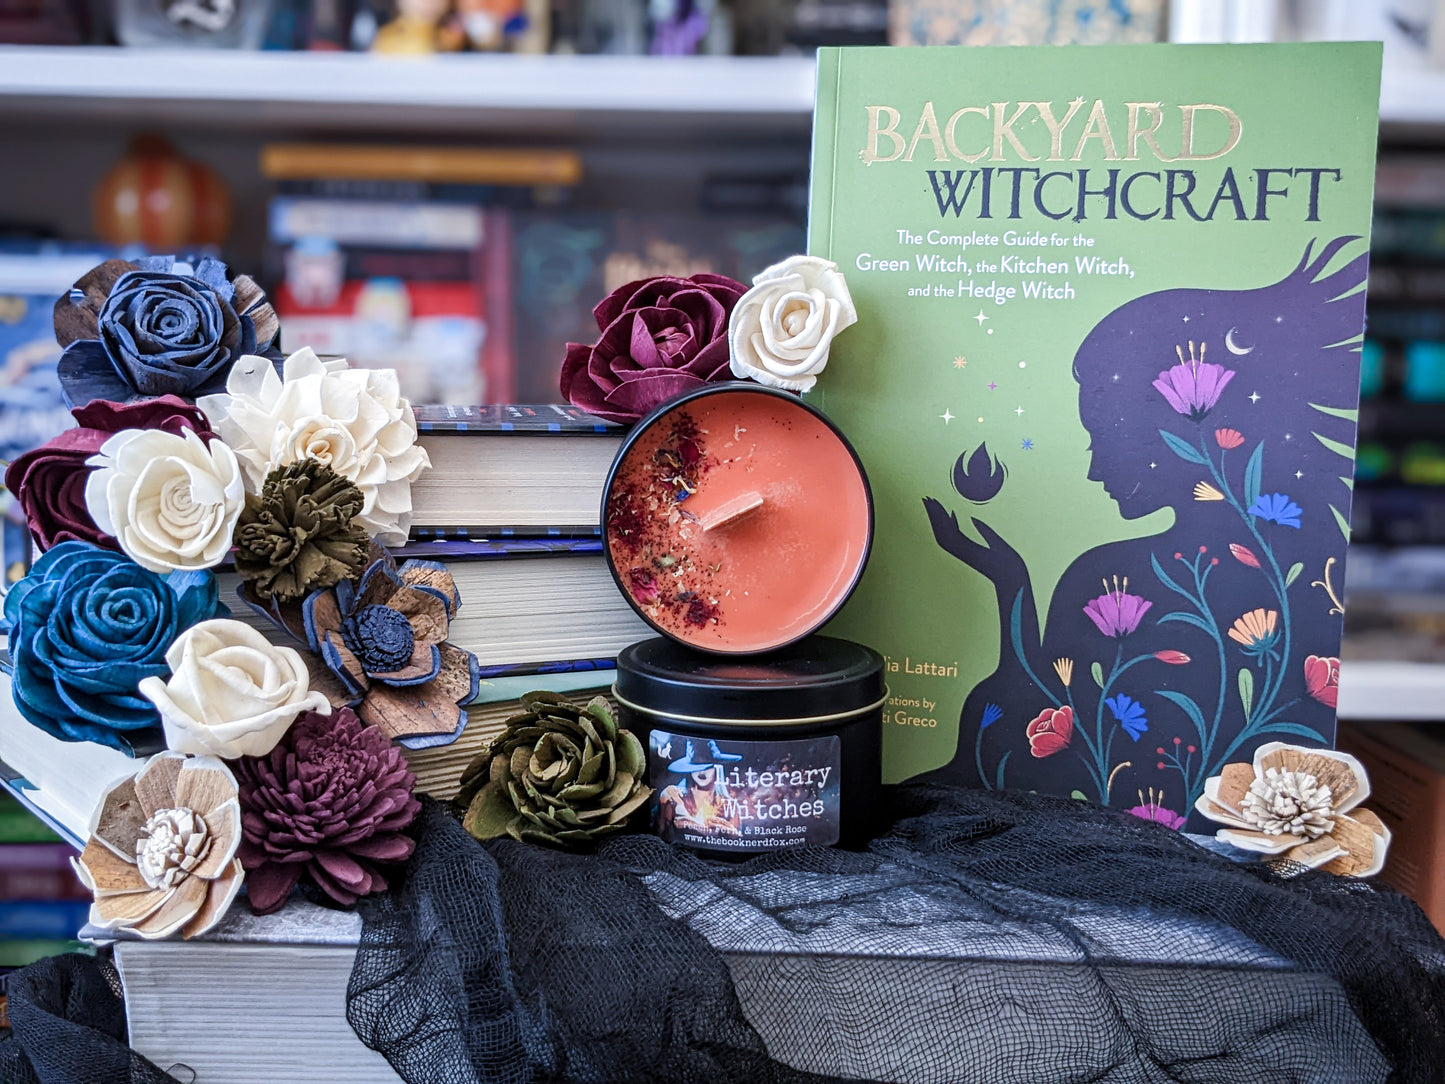 Literary Witches - Peach, Fern, & Black Rose